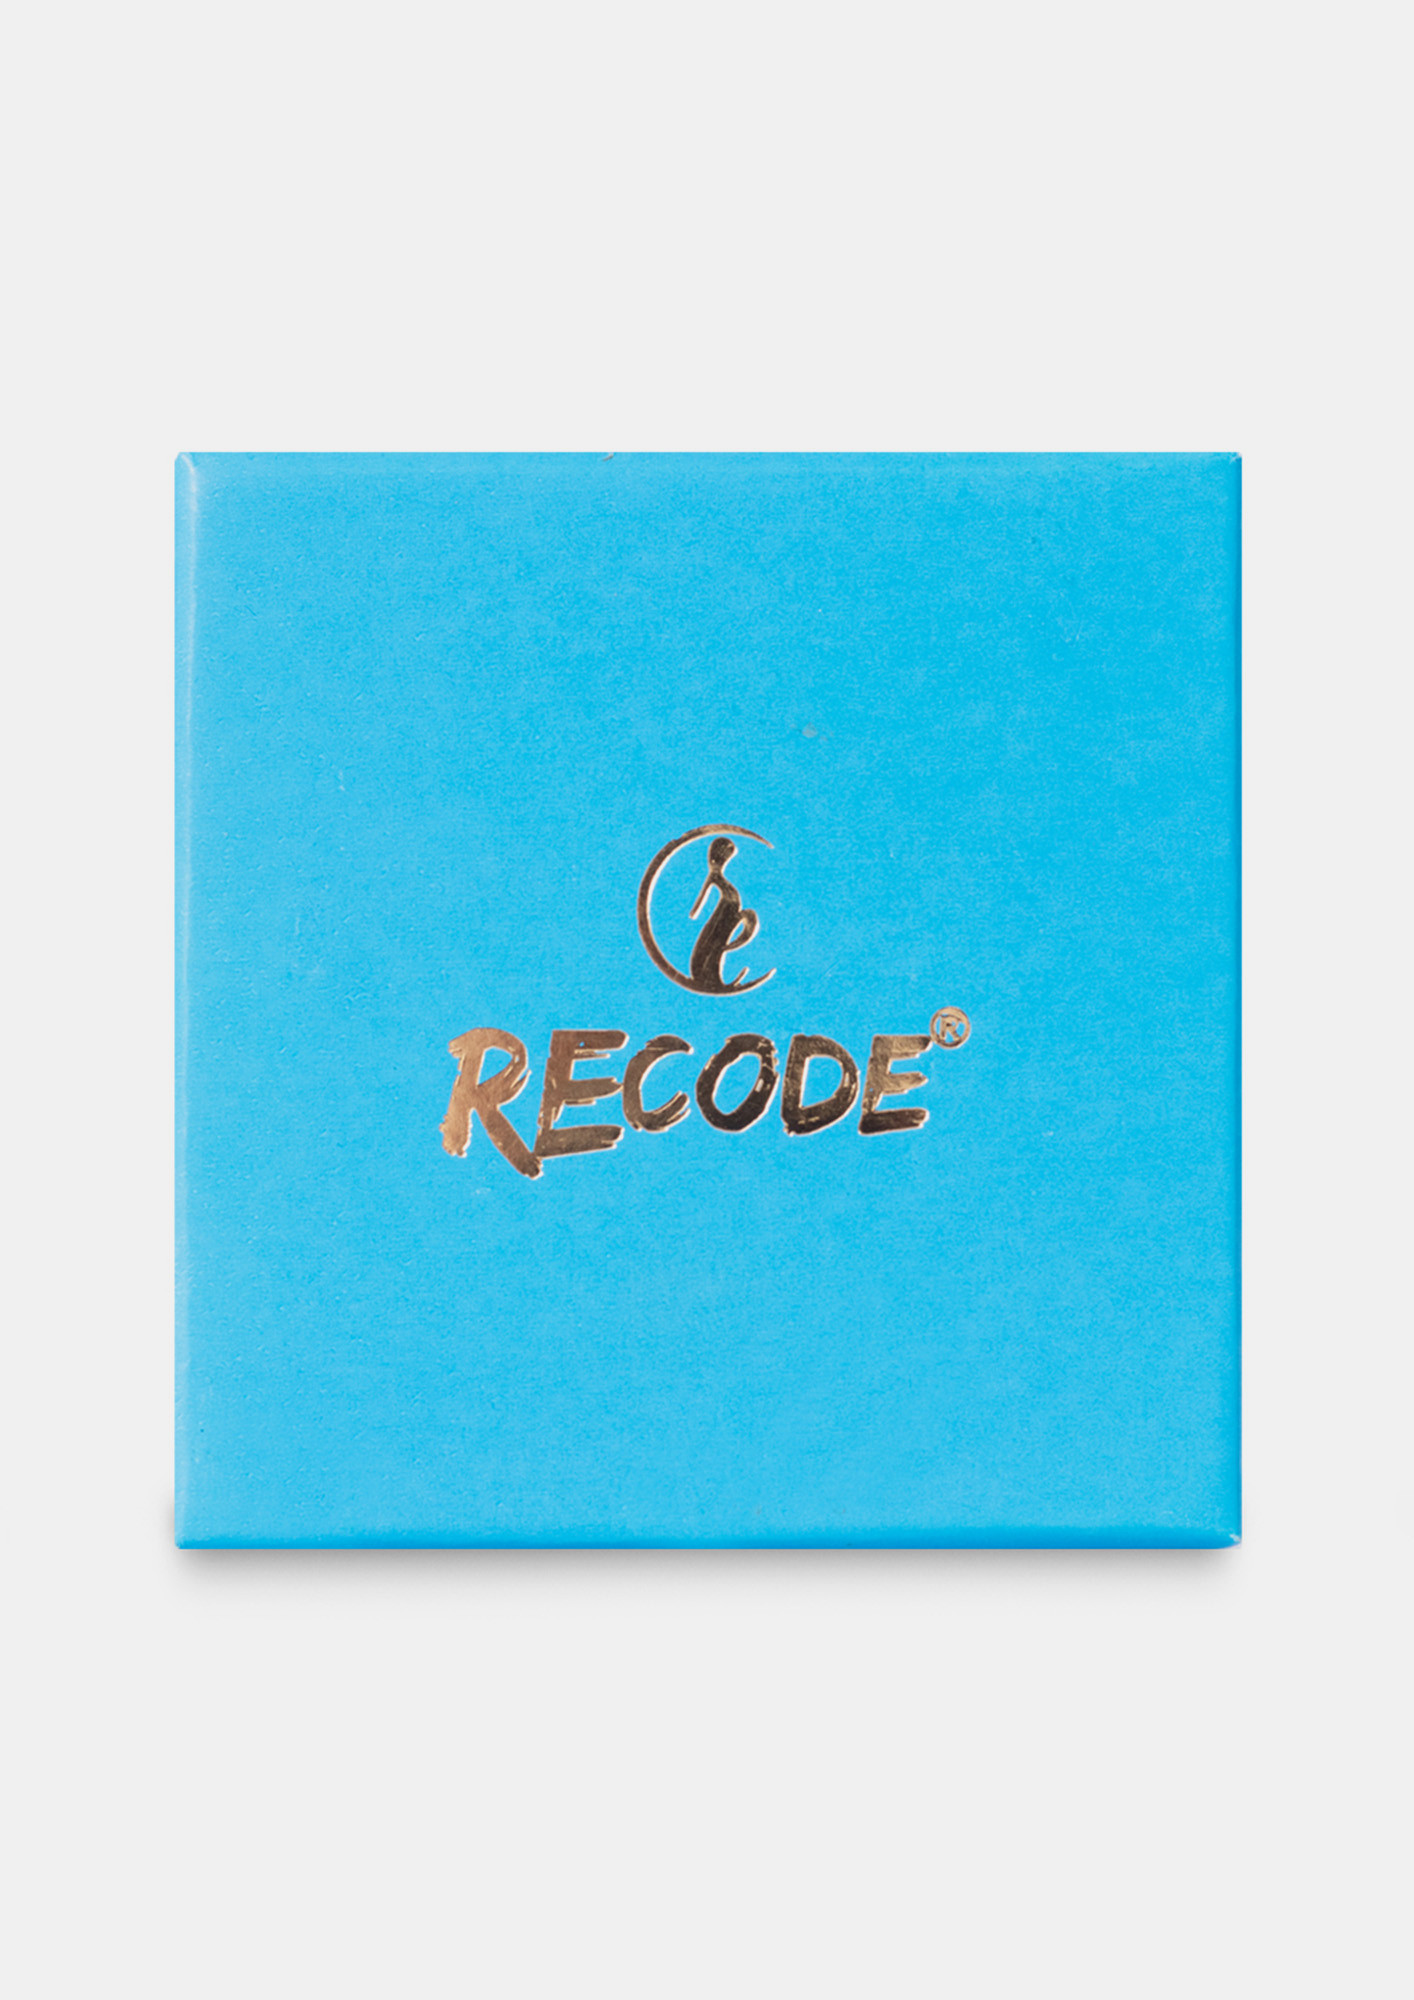 Decode encode recode Precode Logo - YouTube